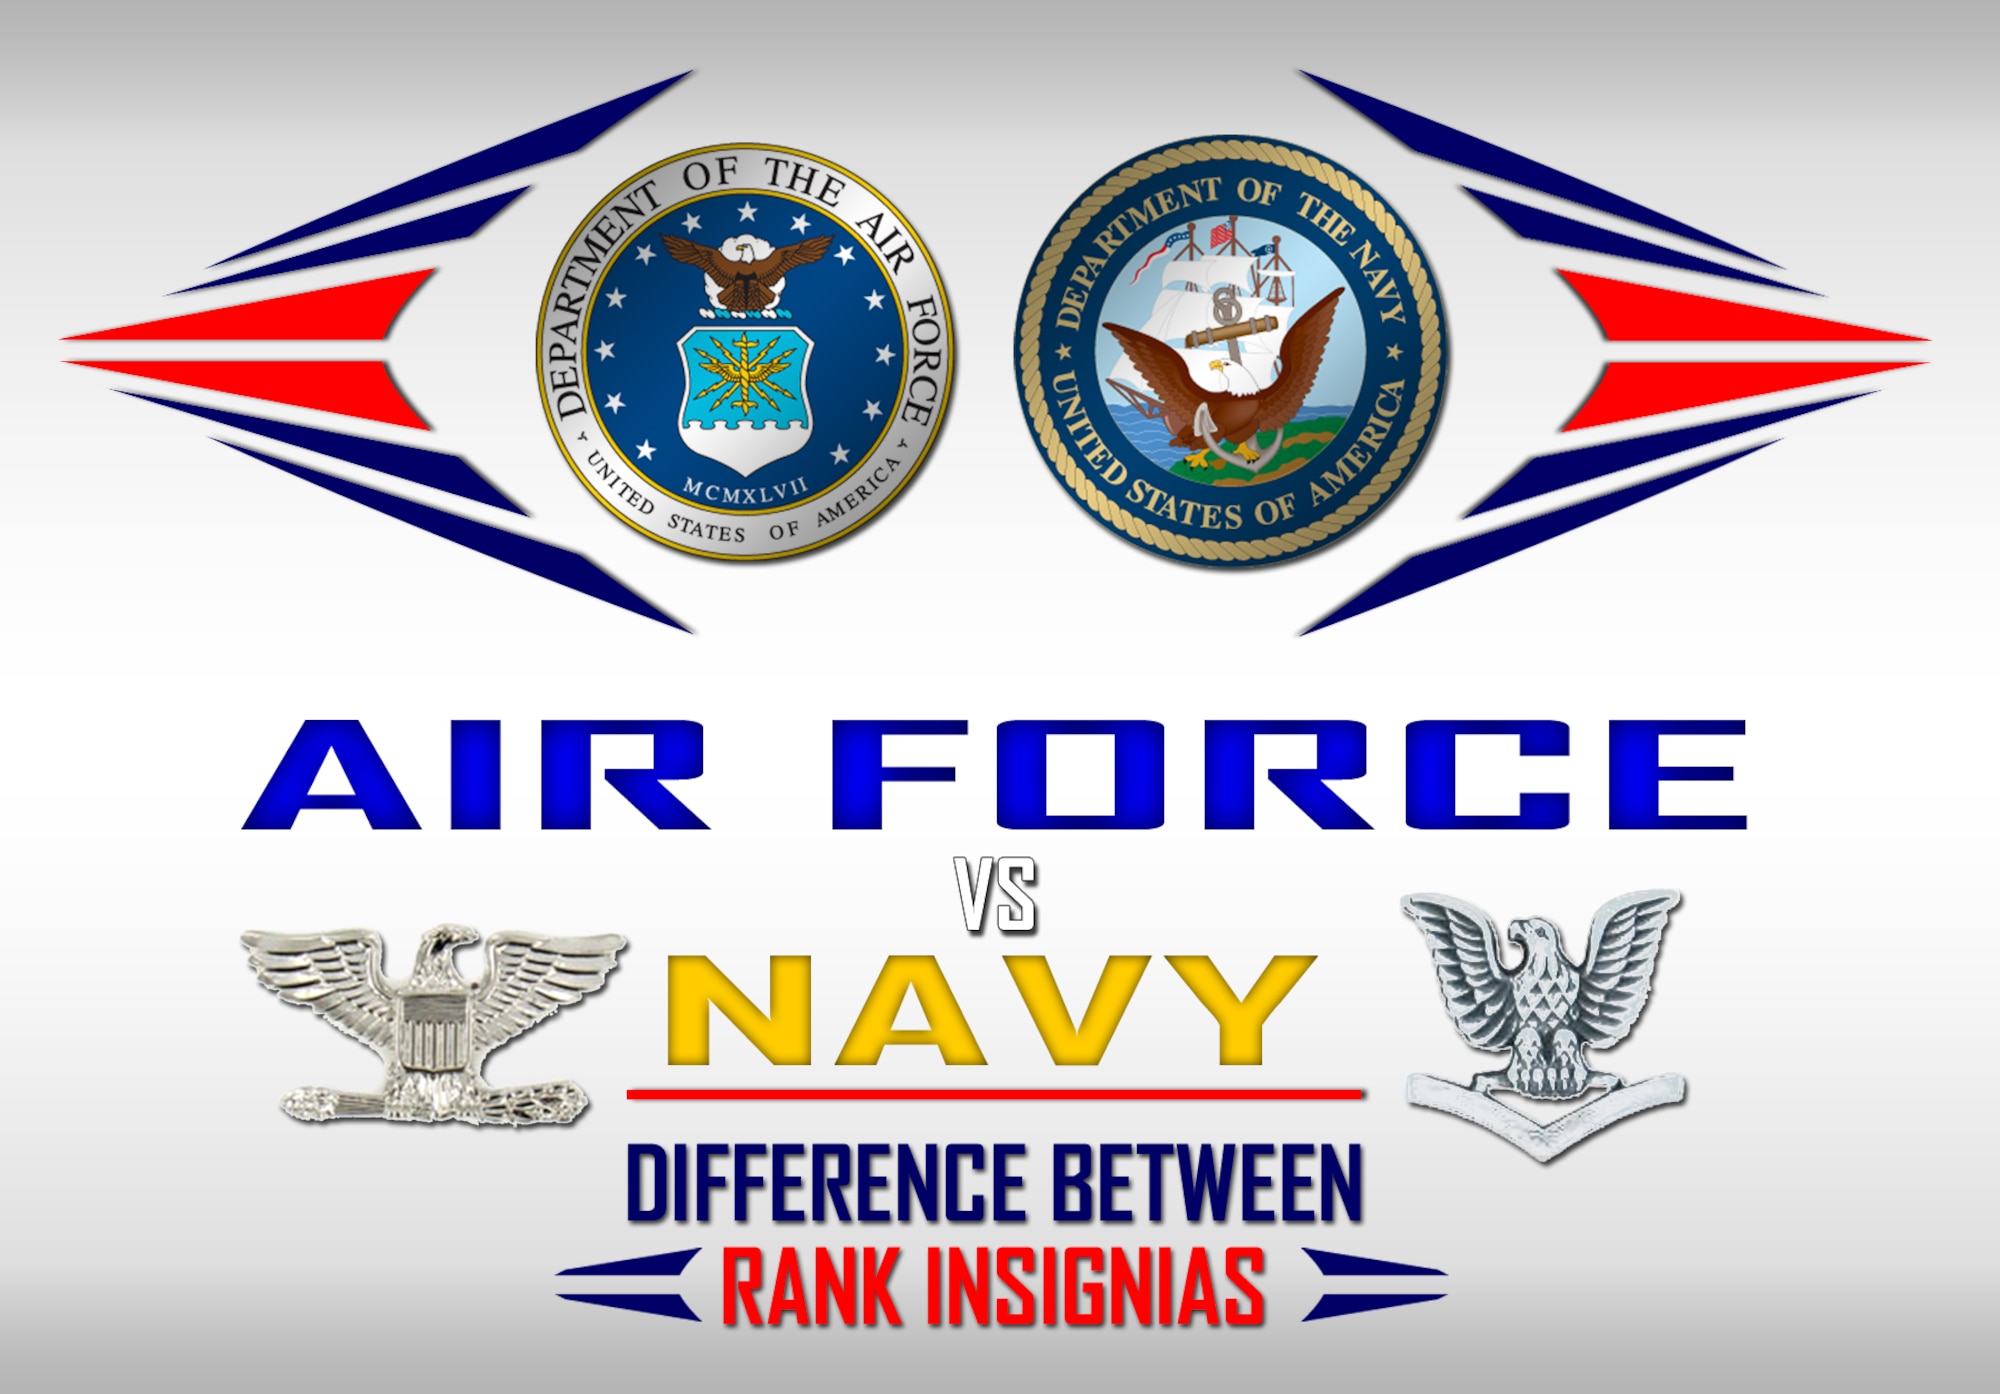 (U.S. Air Force graphic by Senior Airmen Edward Carr)